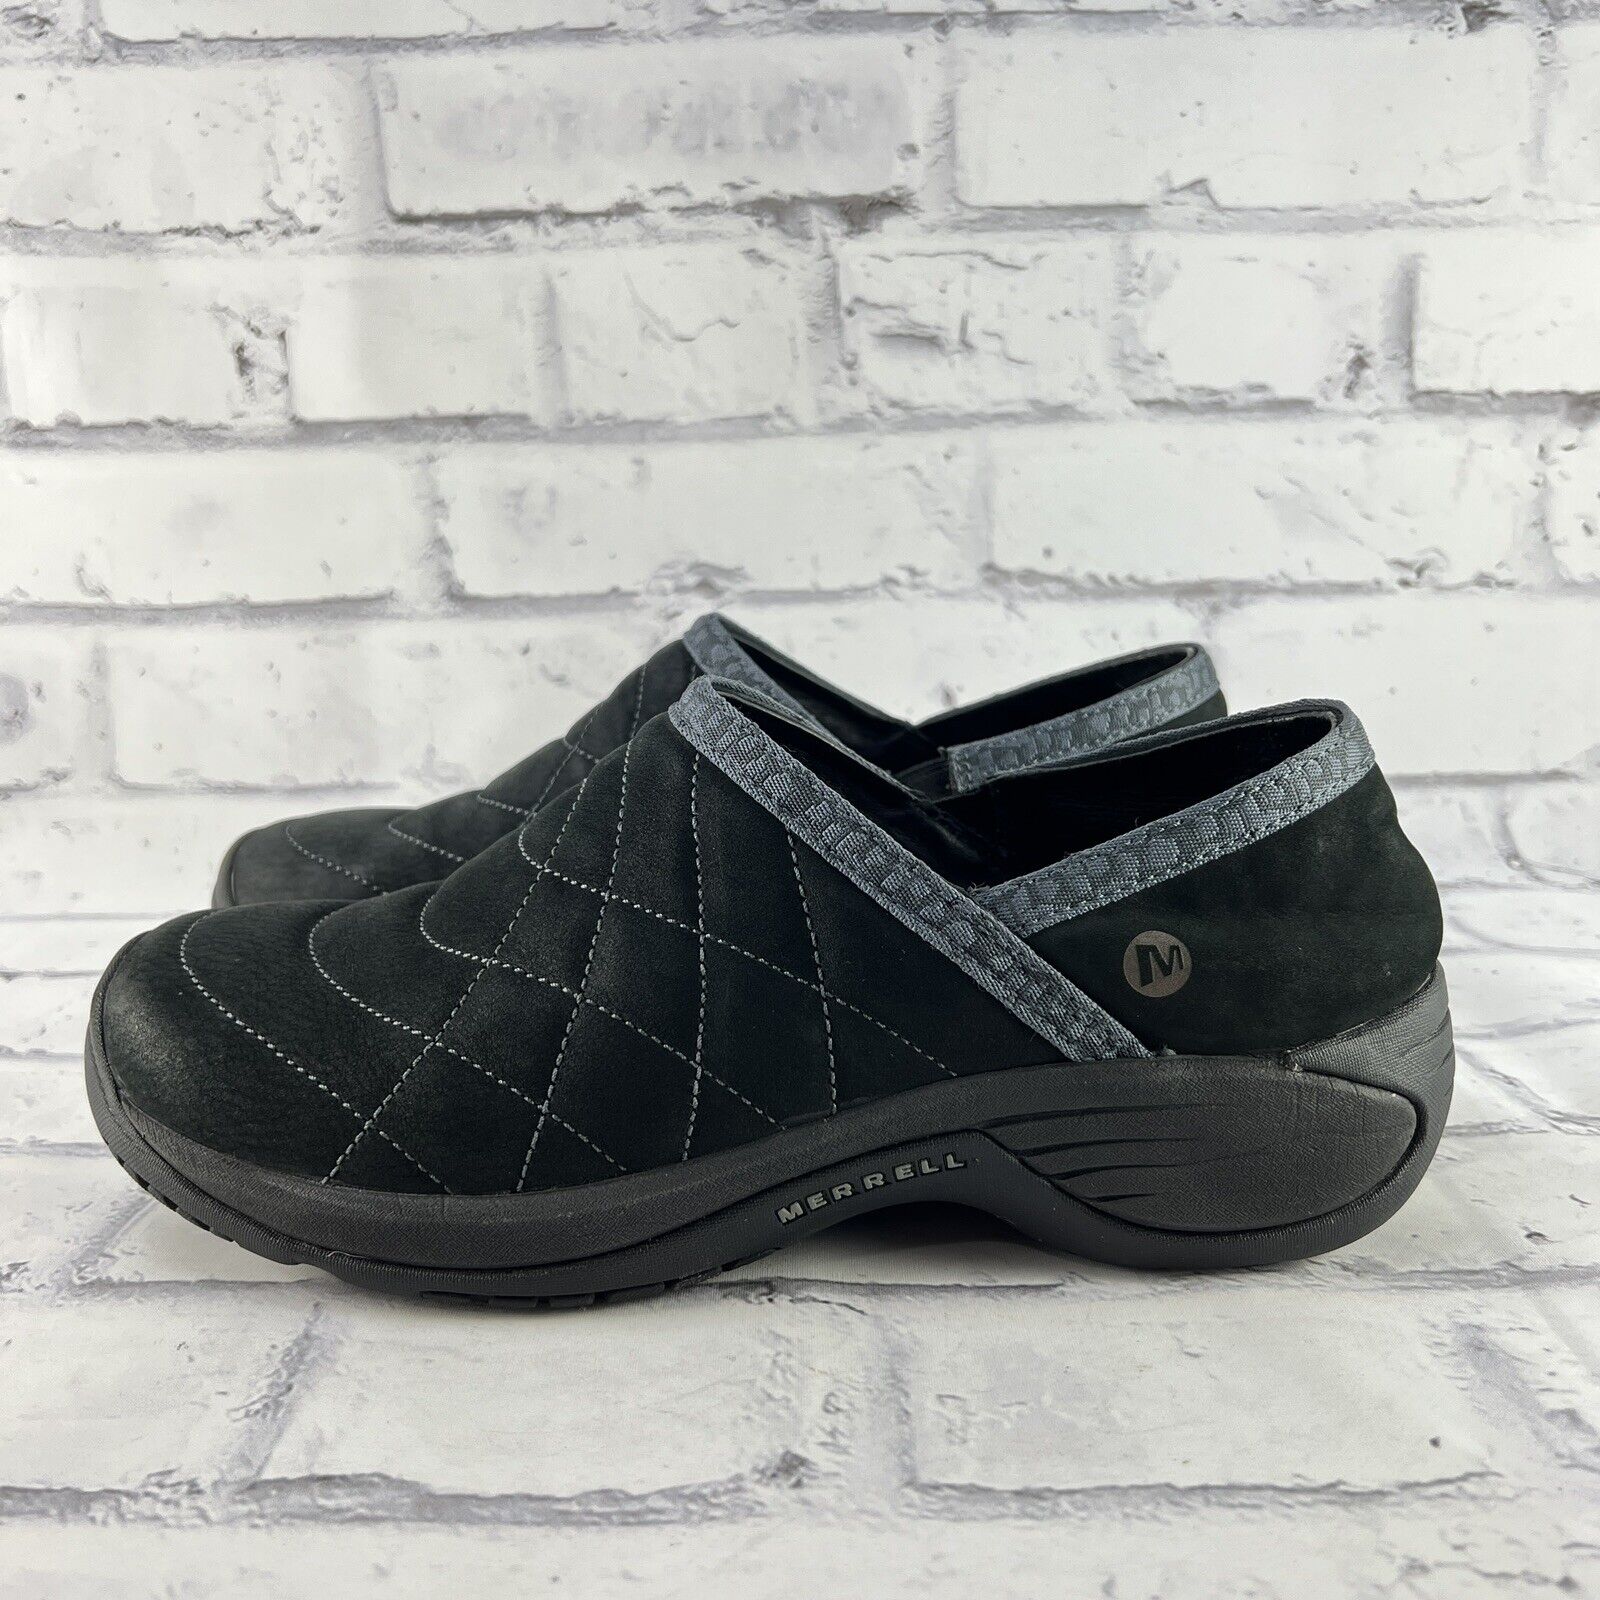 Merrell Encore Quilt Slip On Shoes Women’s 11 Black Suede Leather Comfort